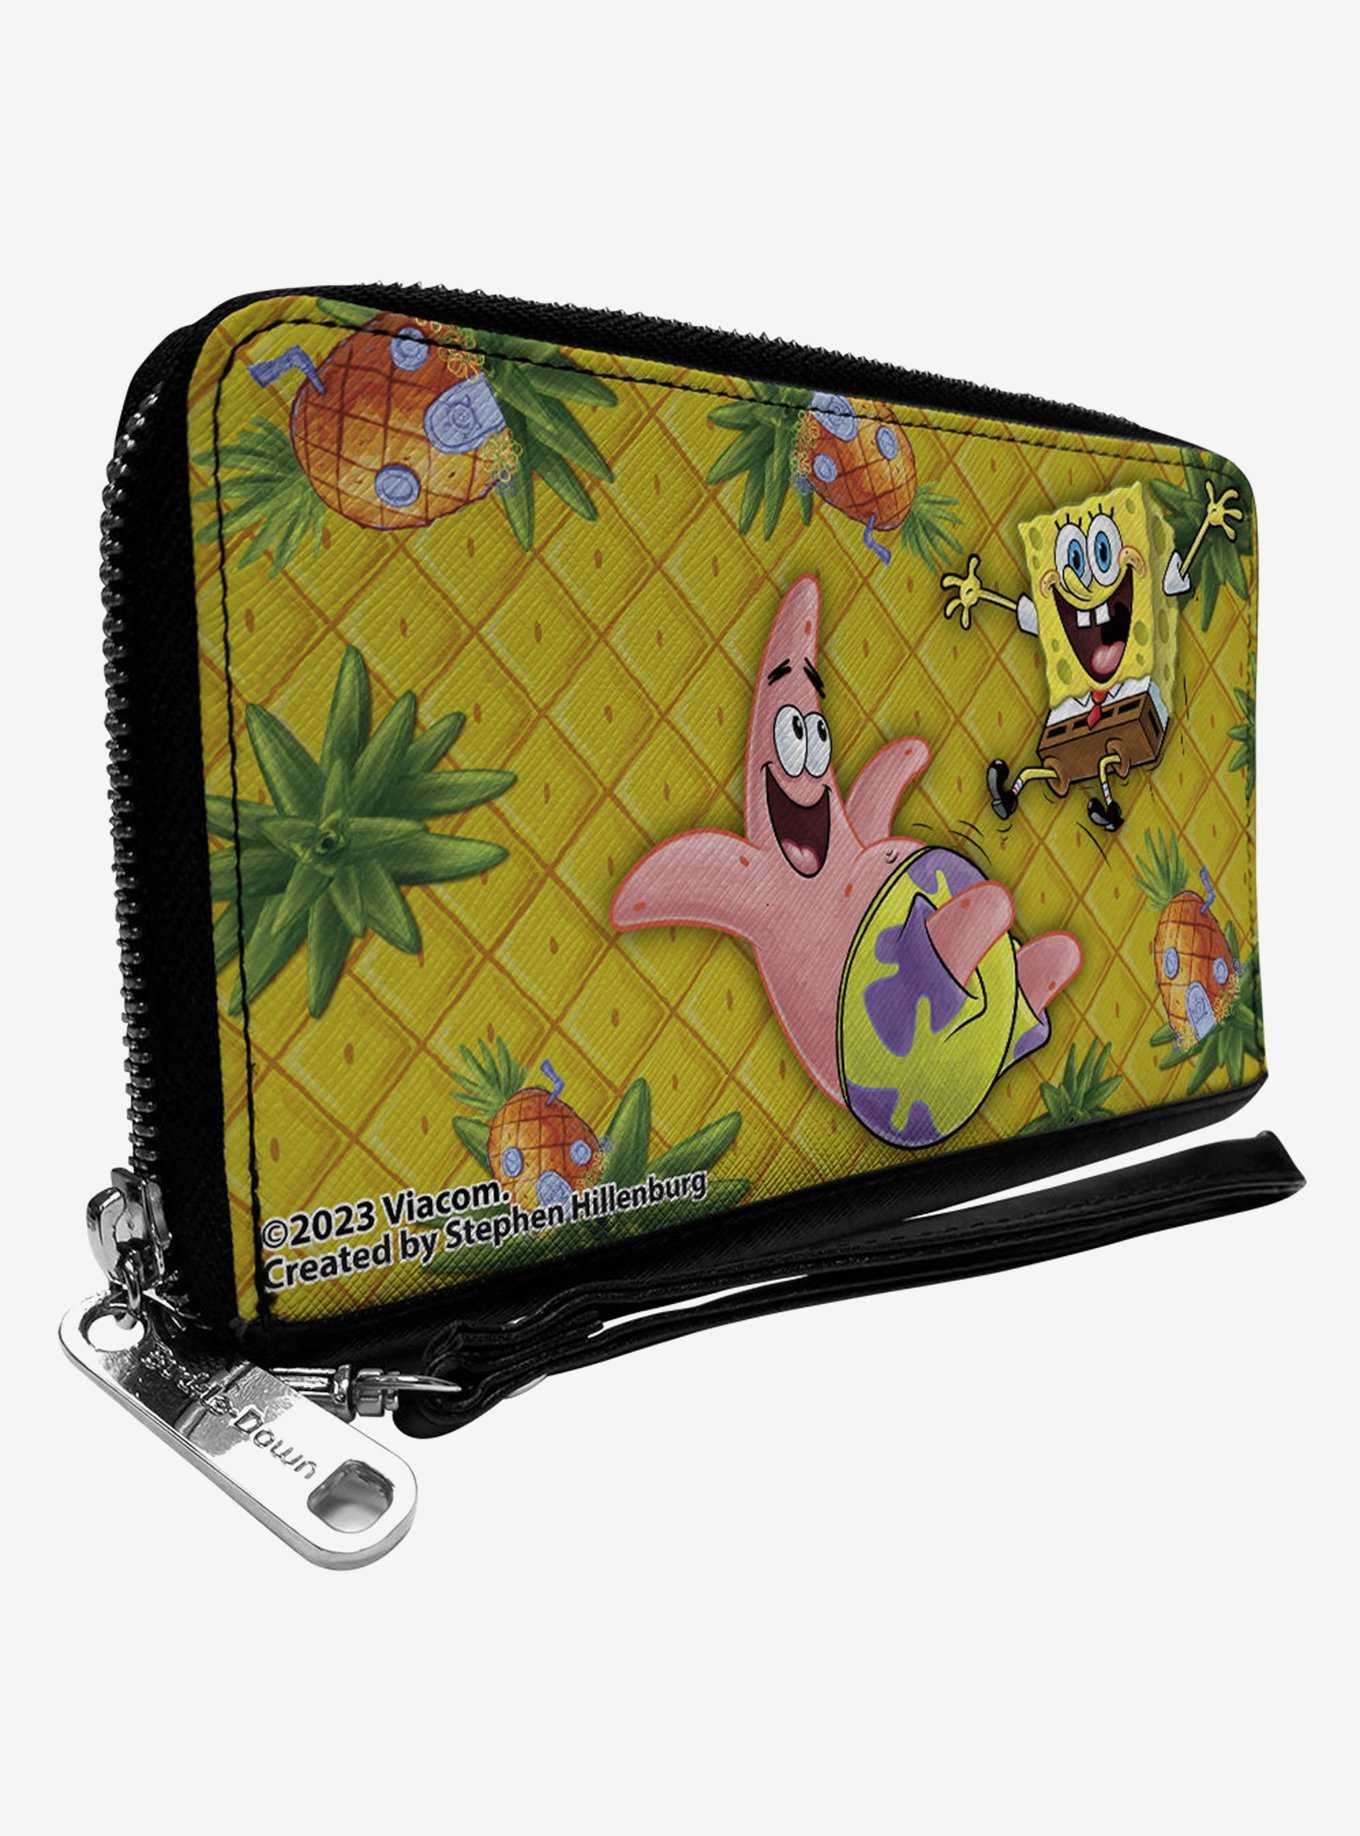 SpongeBob SquarePants and Patrick Star Pineapple Zip Around Wallet, , hi-res